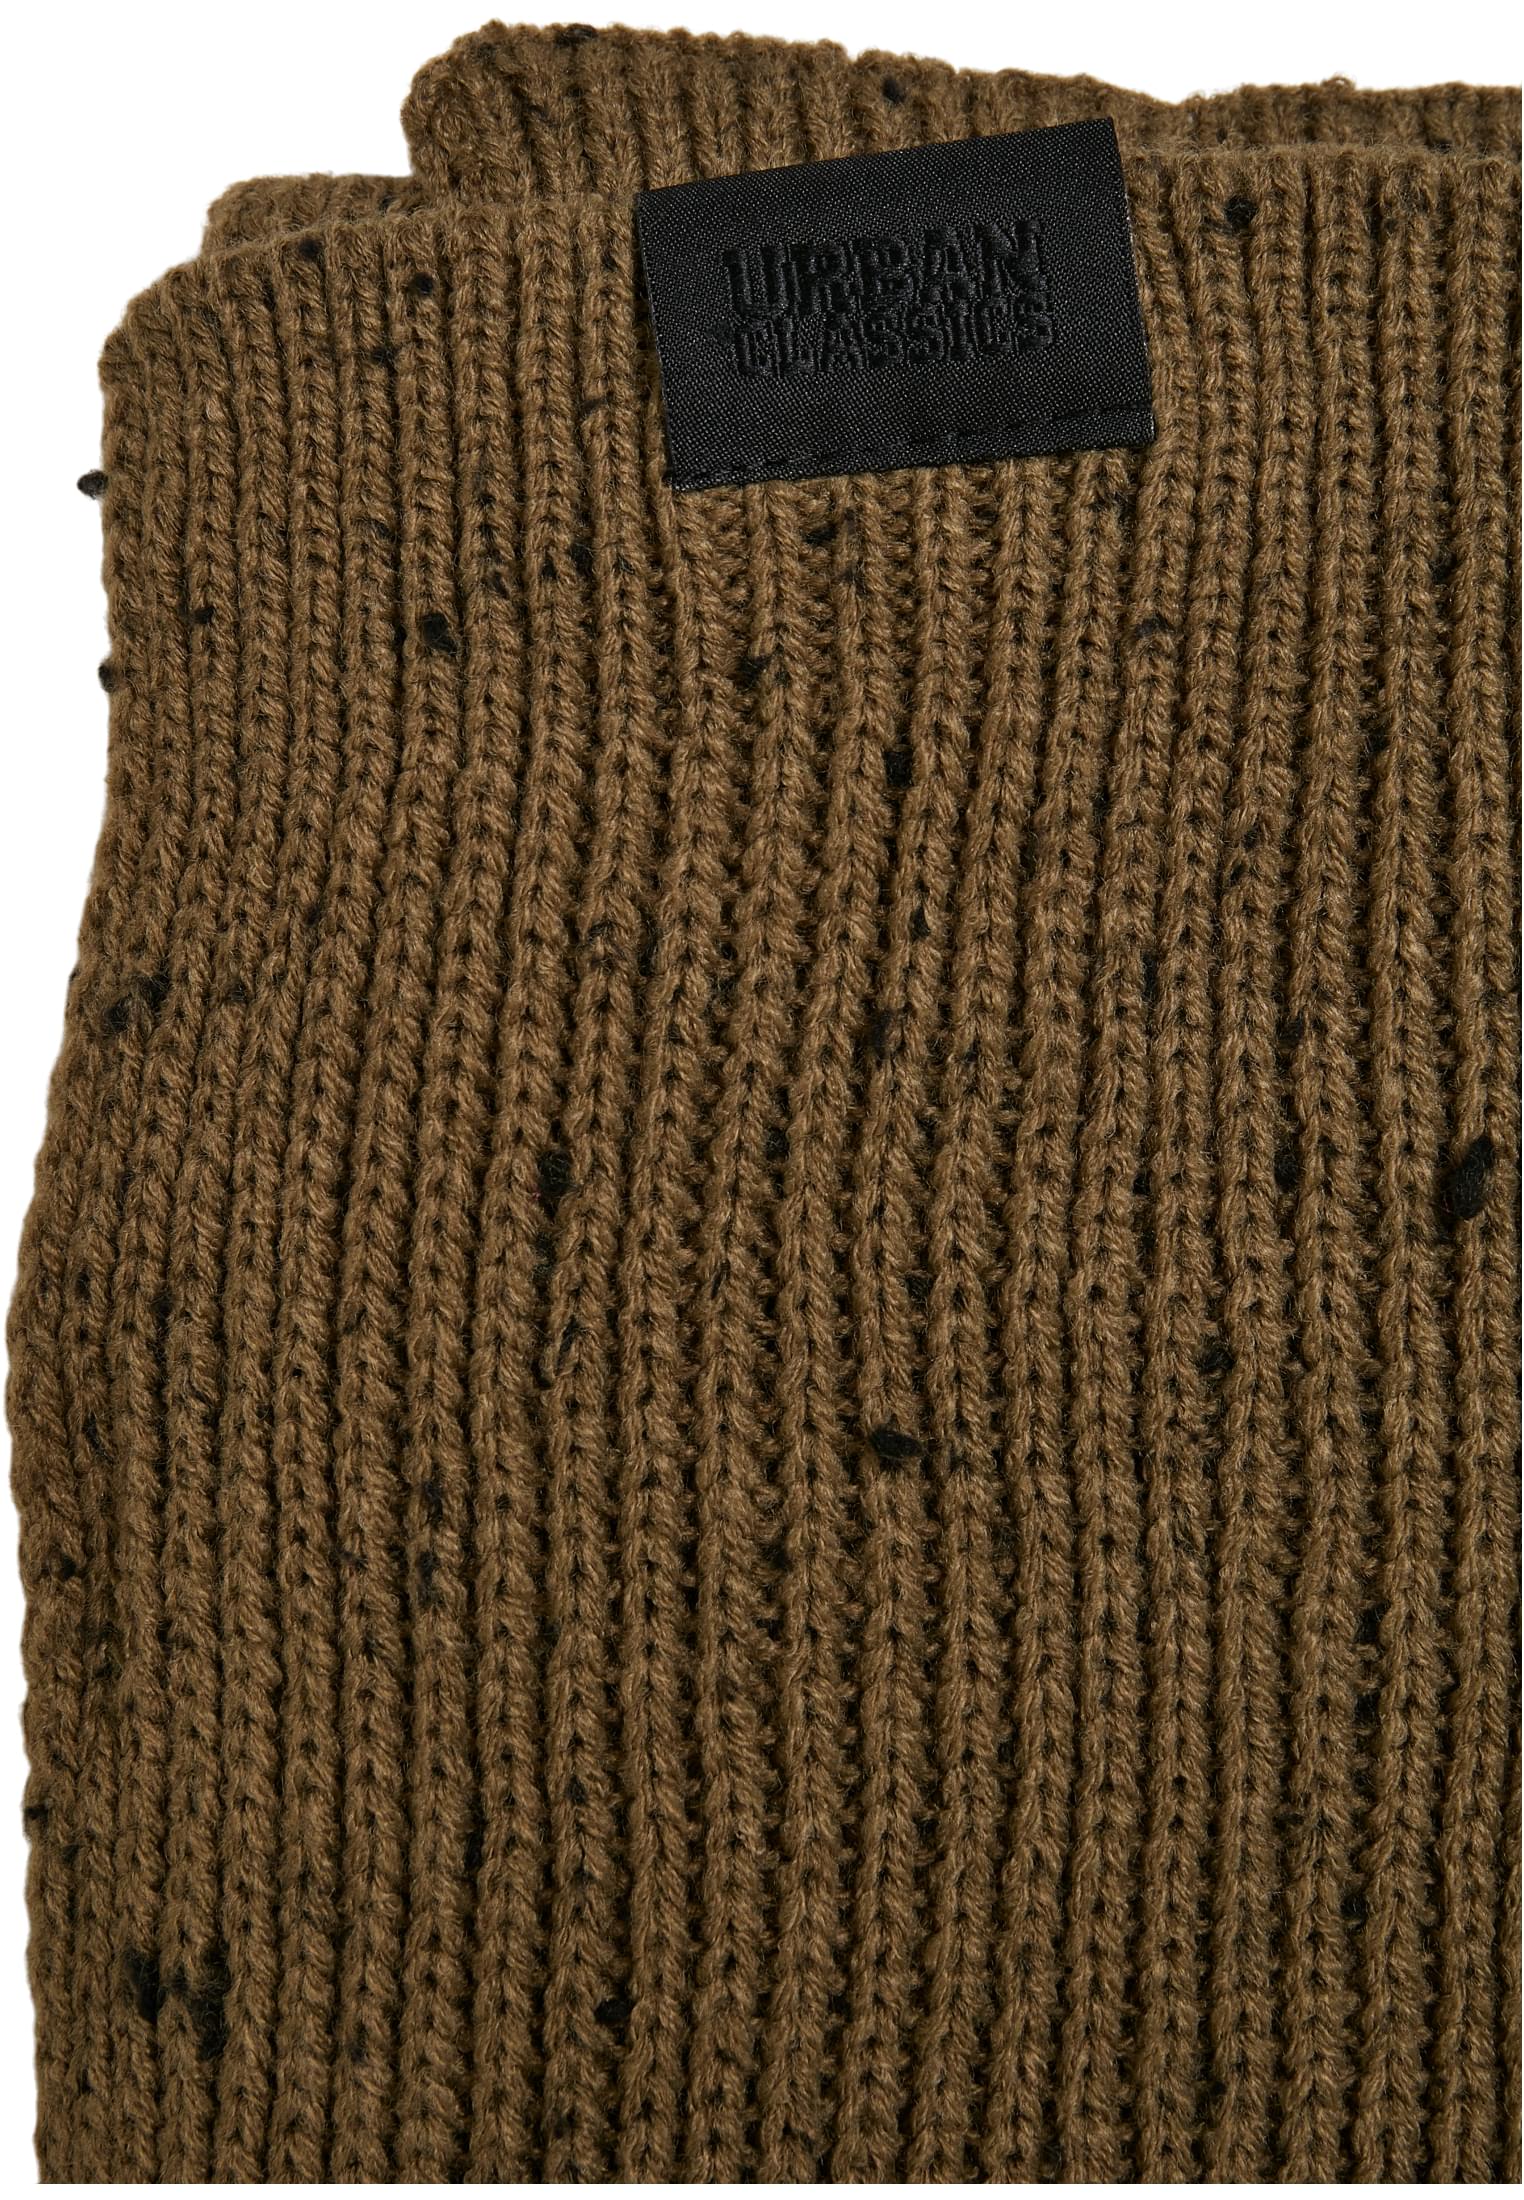 Handschuhe & Schals Nap Yarn Knit Set in Farbe olive/black